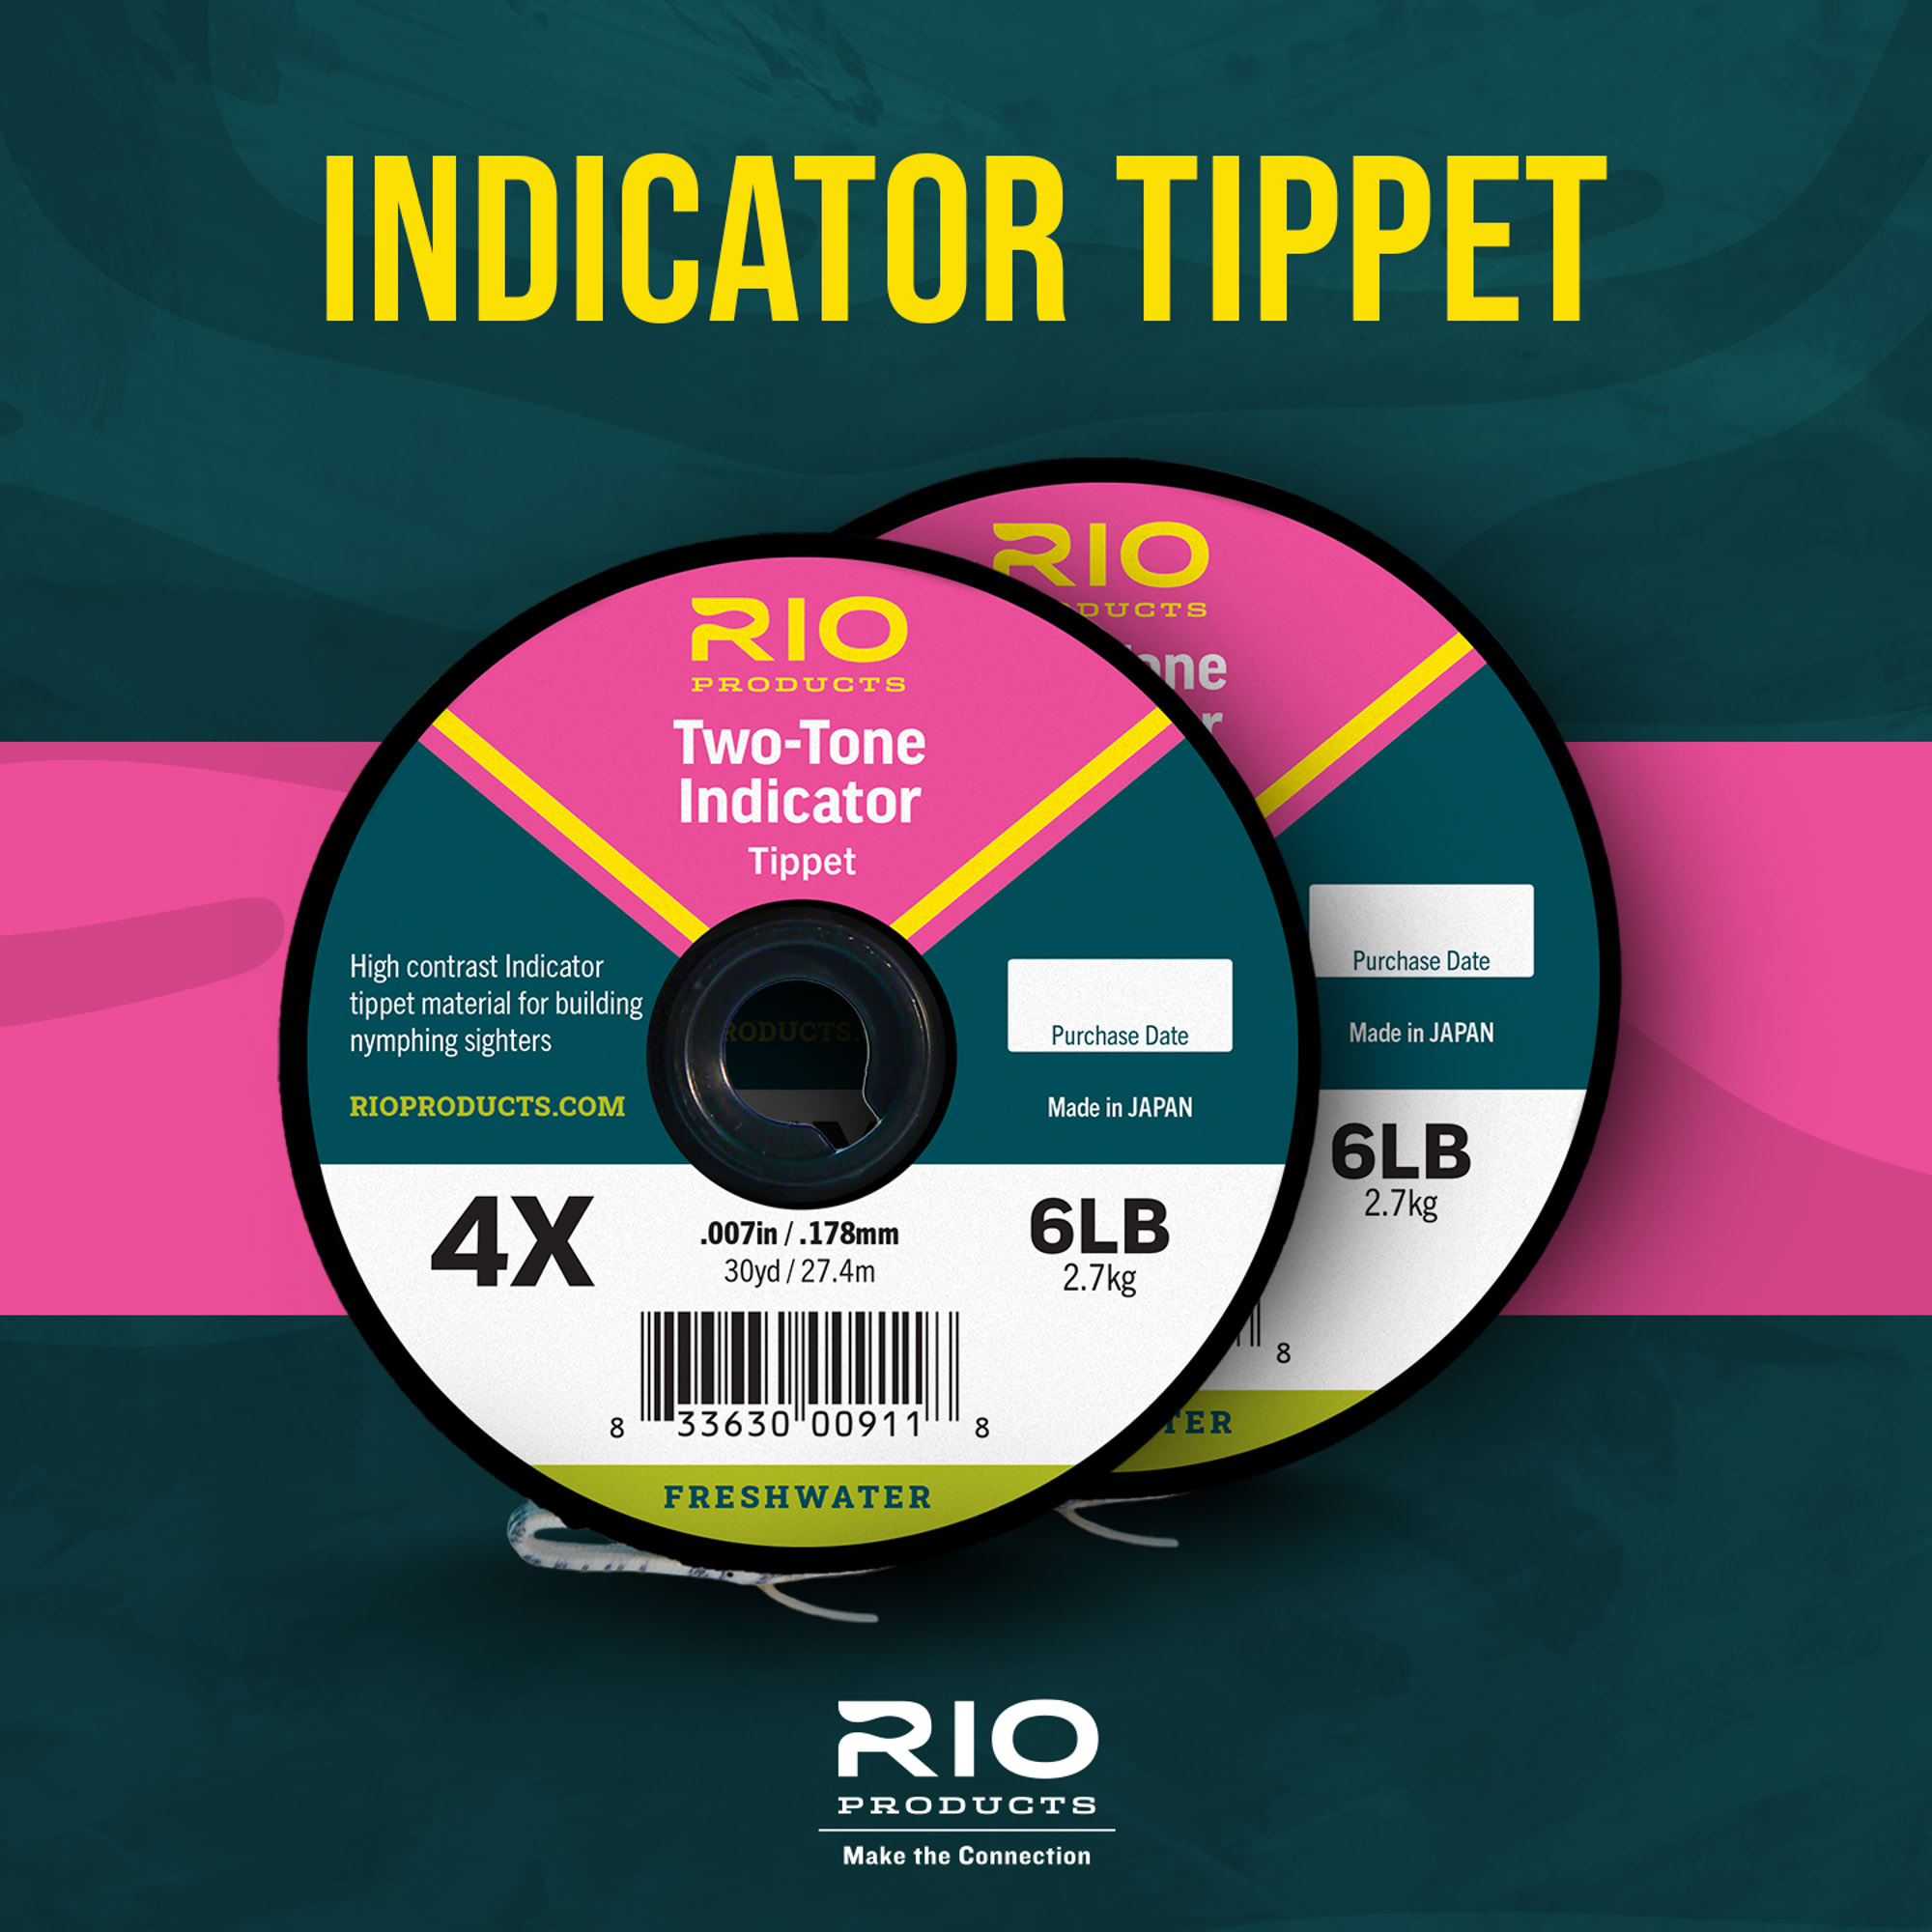 RIO 2-Tone Indicator Tippet – Guide Flyfishing, Fly Fishing Rods, Reels, Sage, Redington, RIO